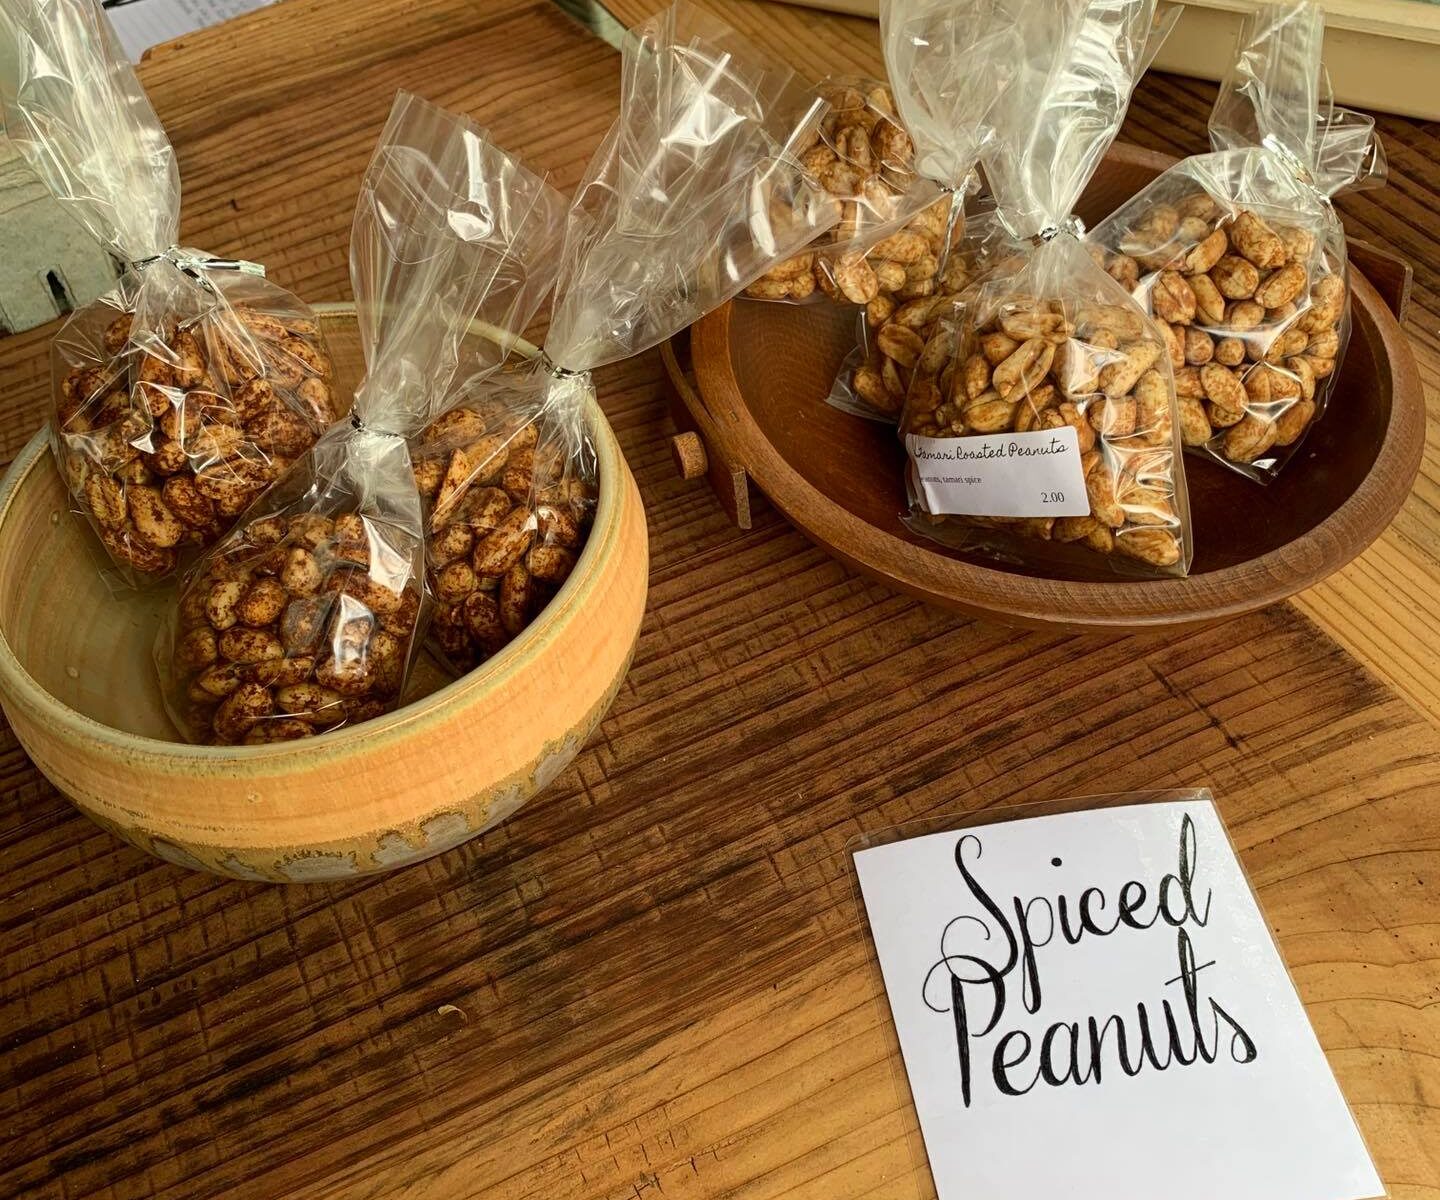 Image of Spiced Peanuts on display